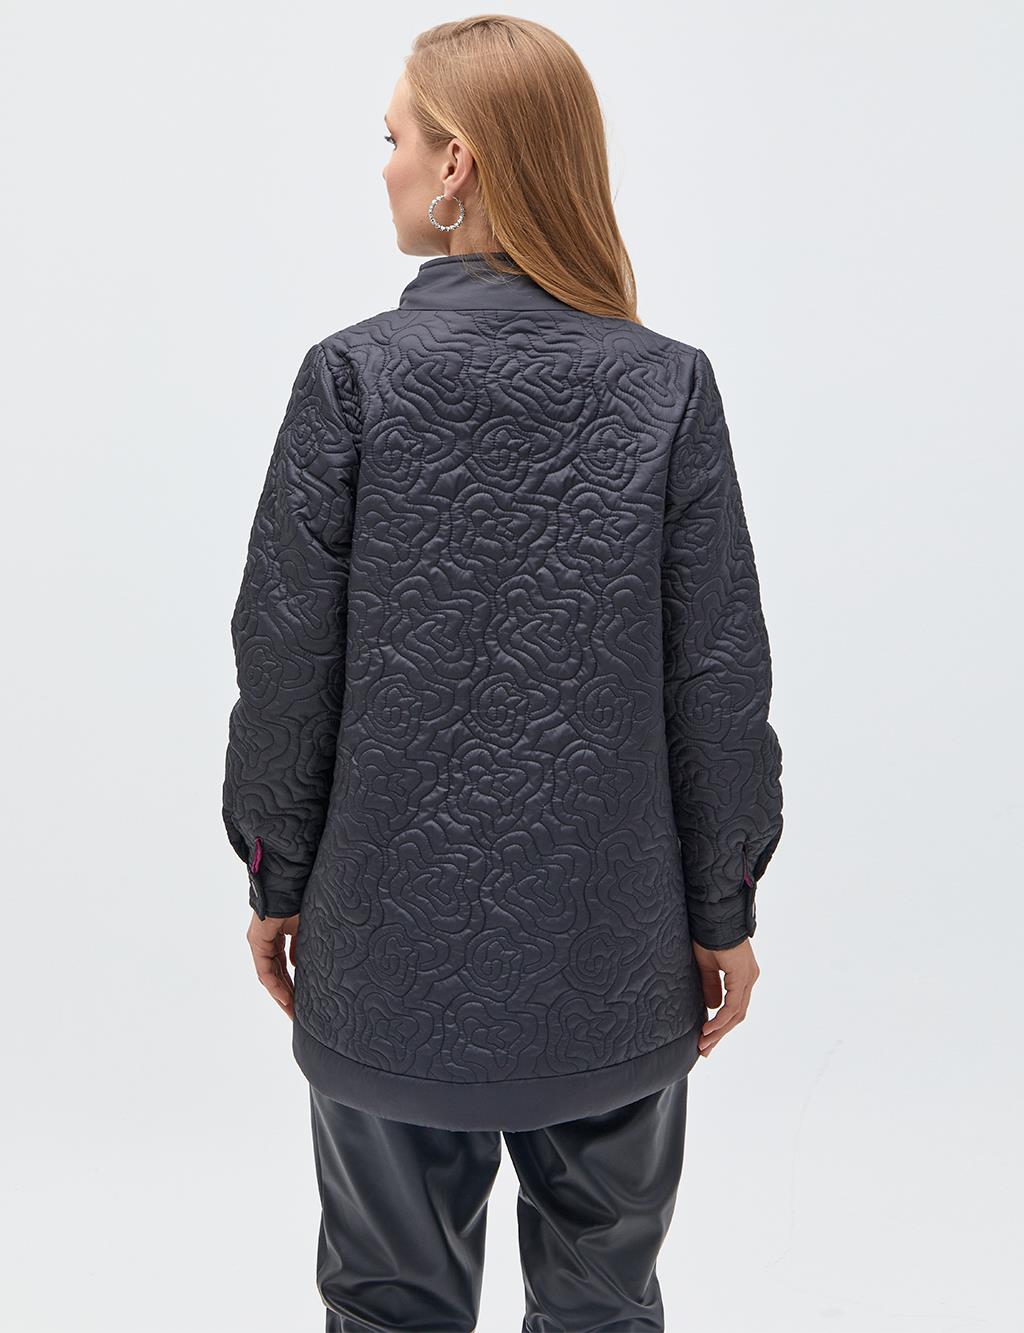 Abstract Stitch Pattern Jacket Black